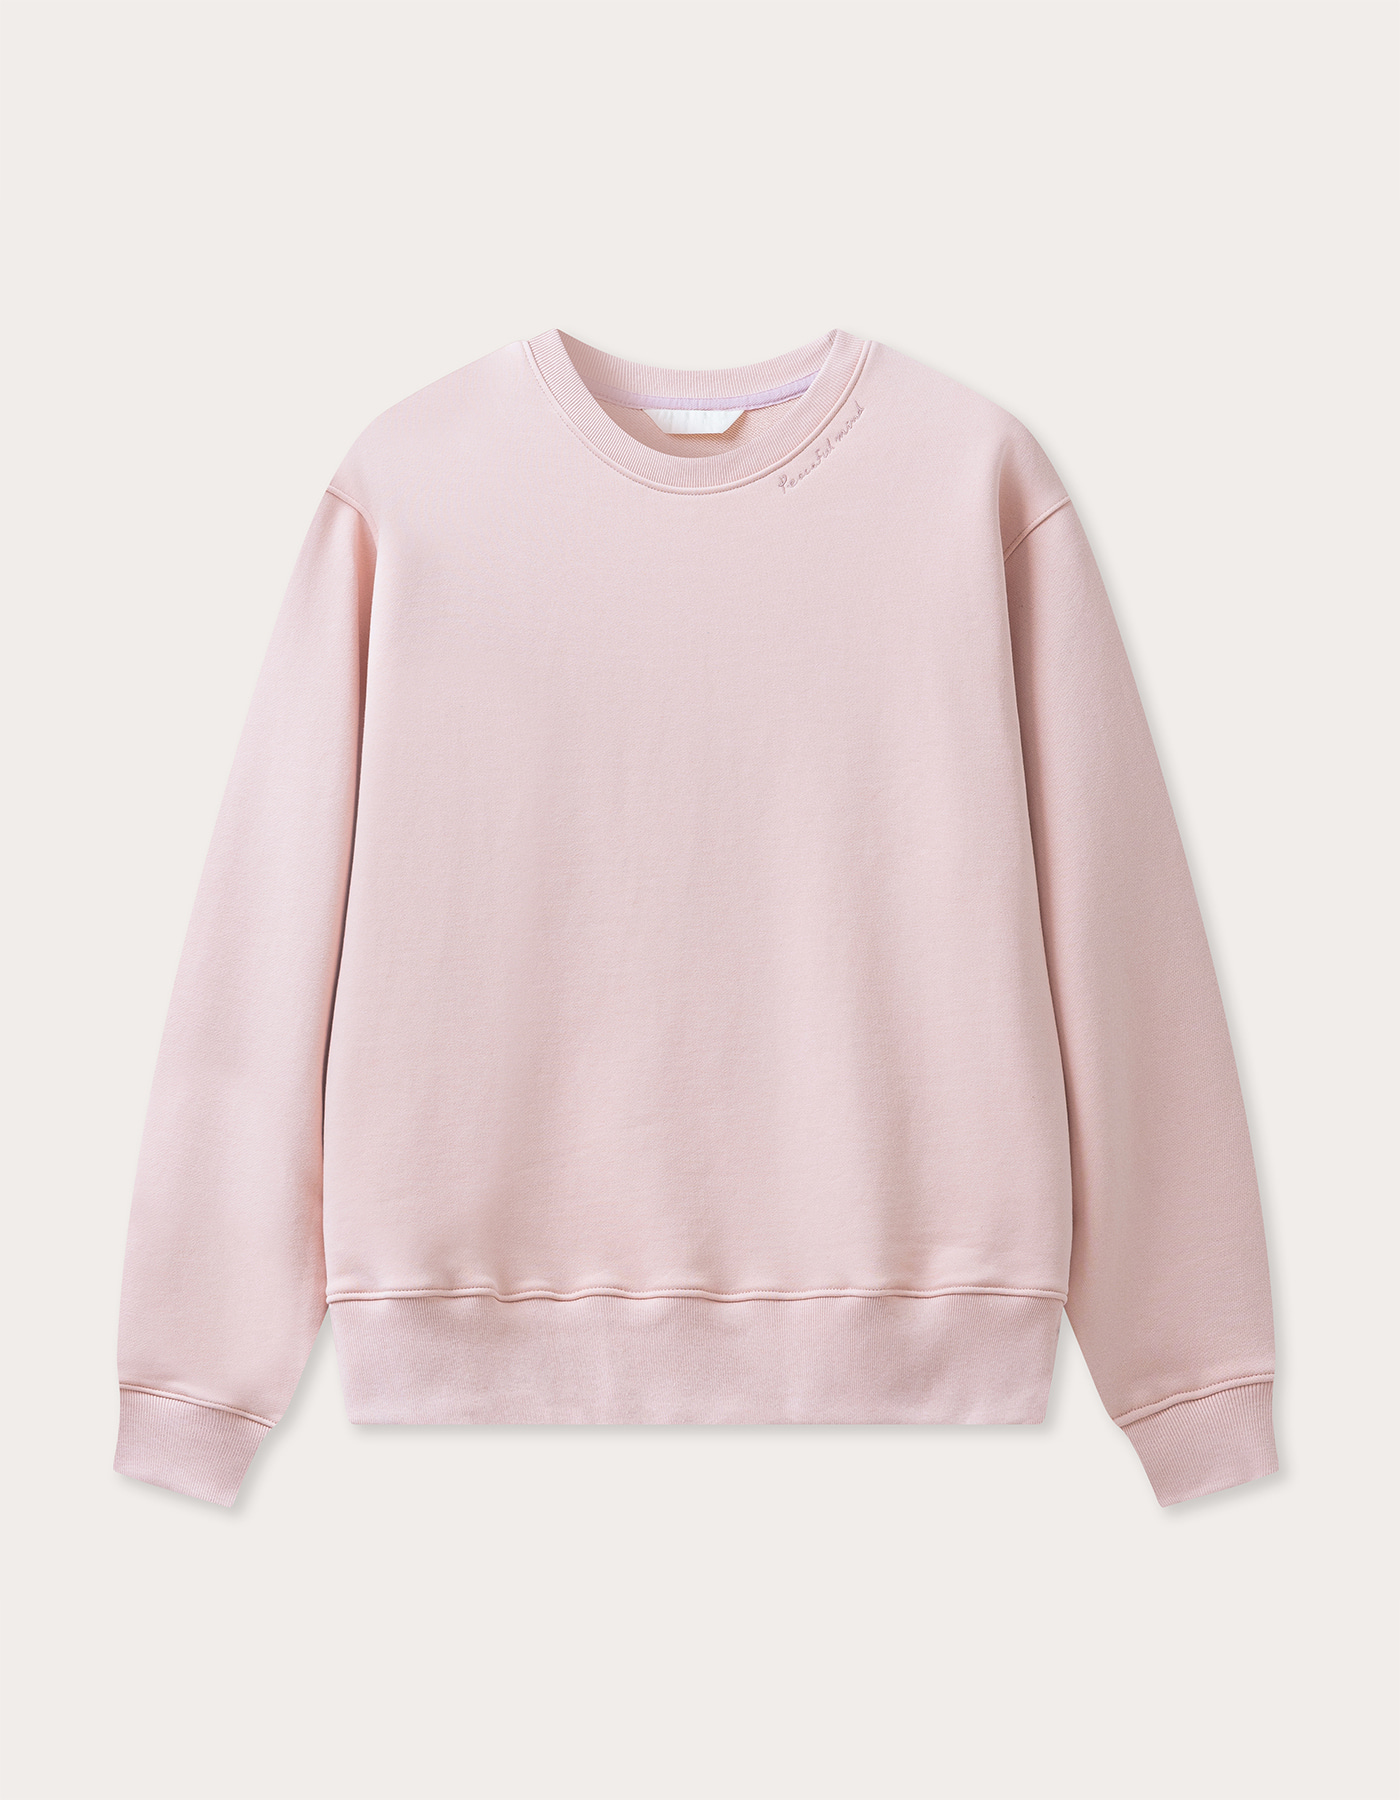 Soft Peaceful Embroidery Sweatshirt (Pink)